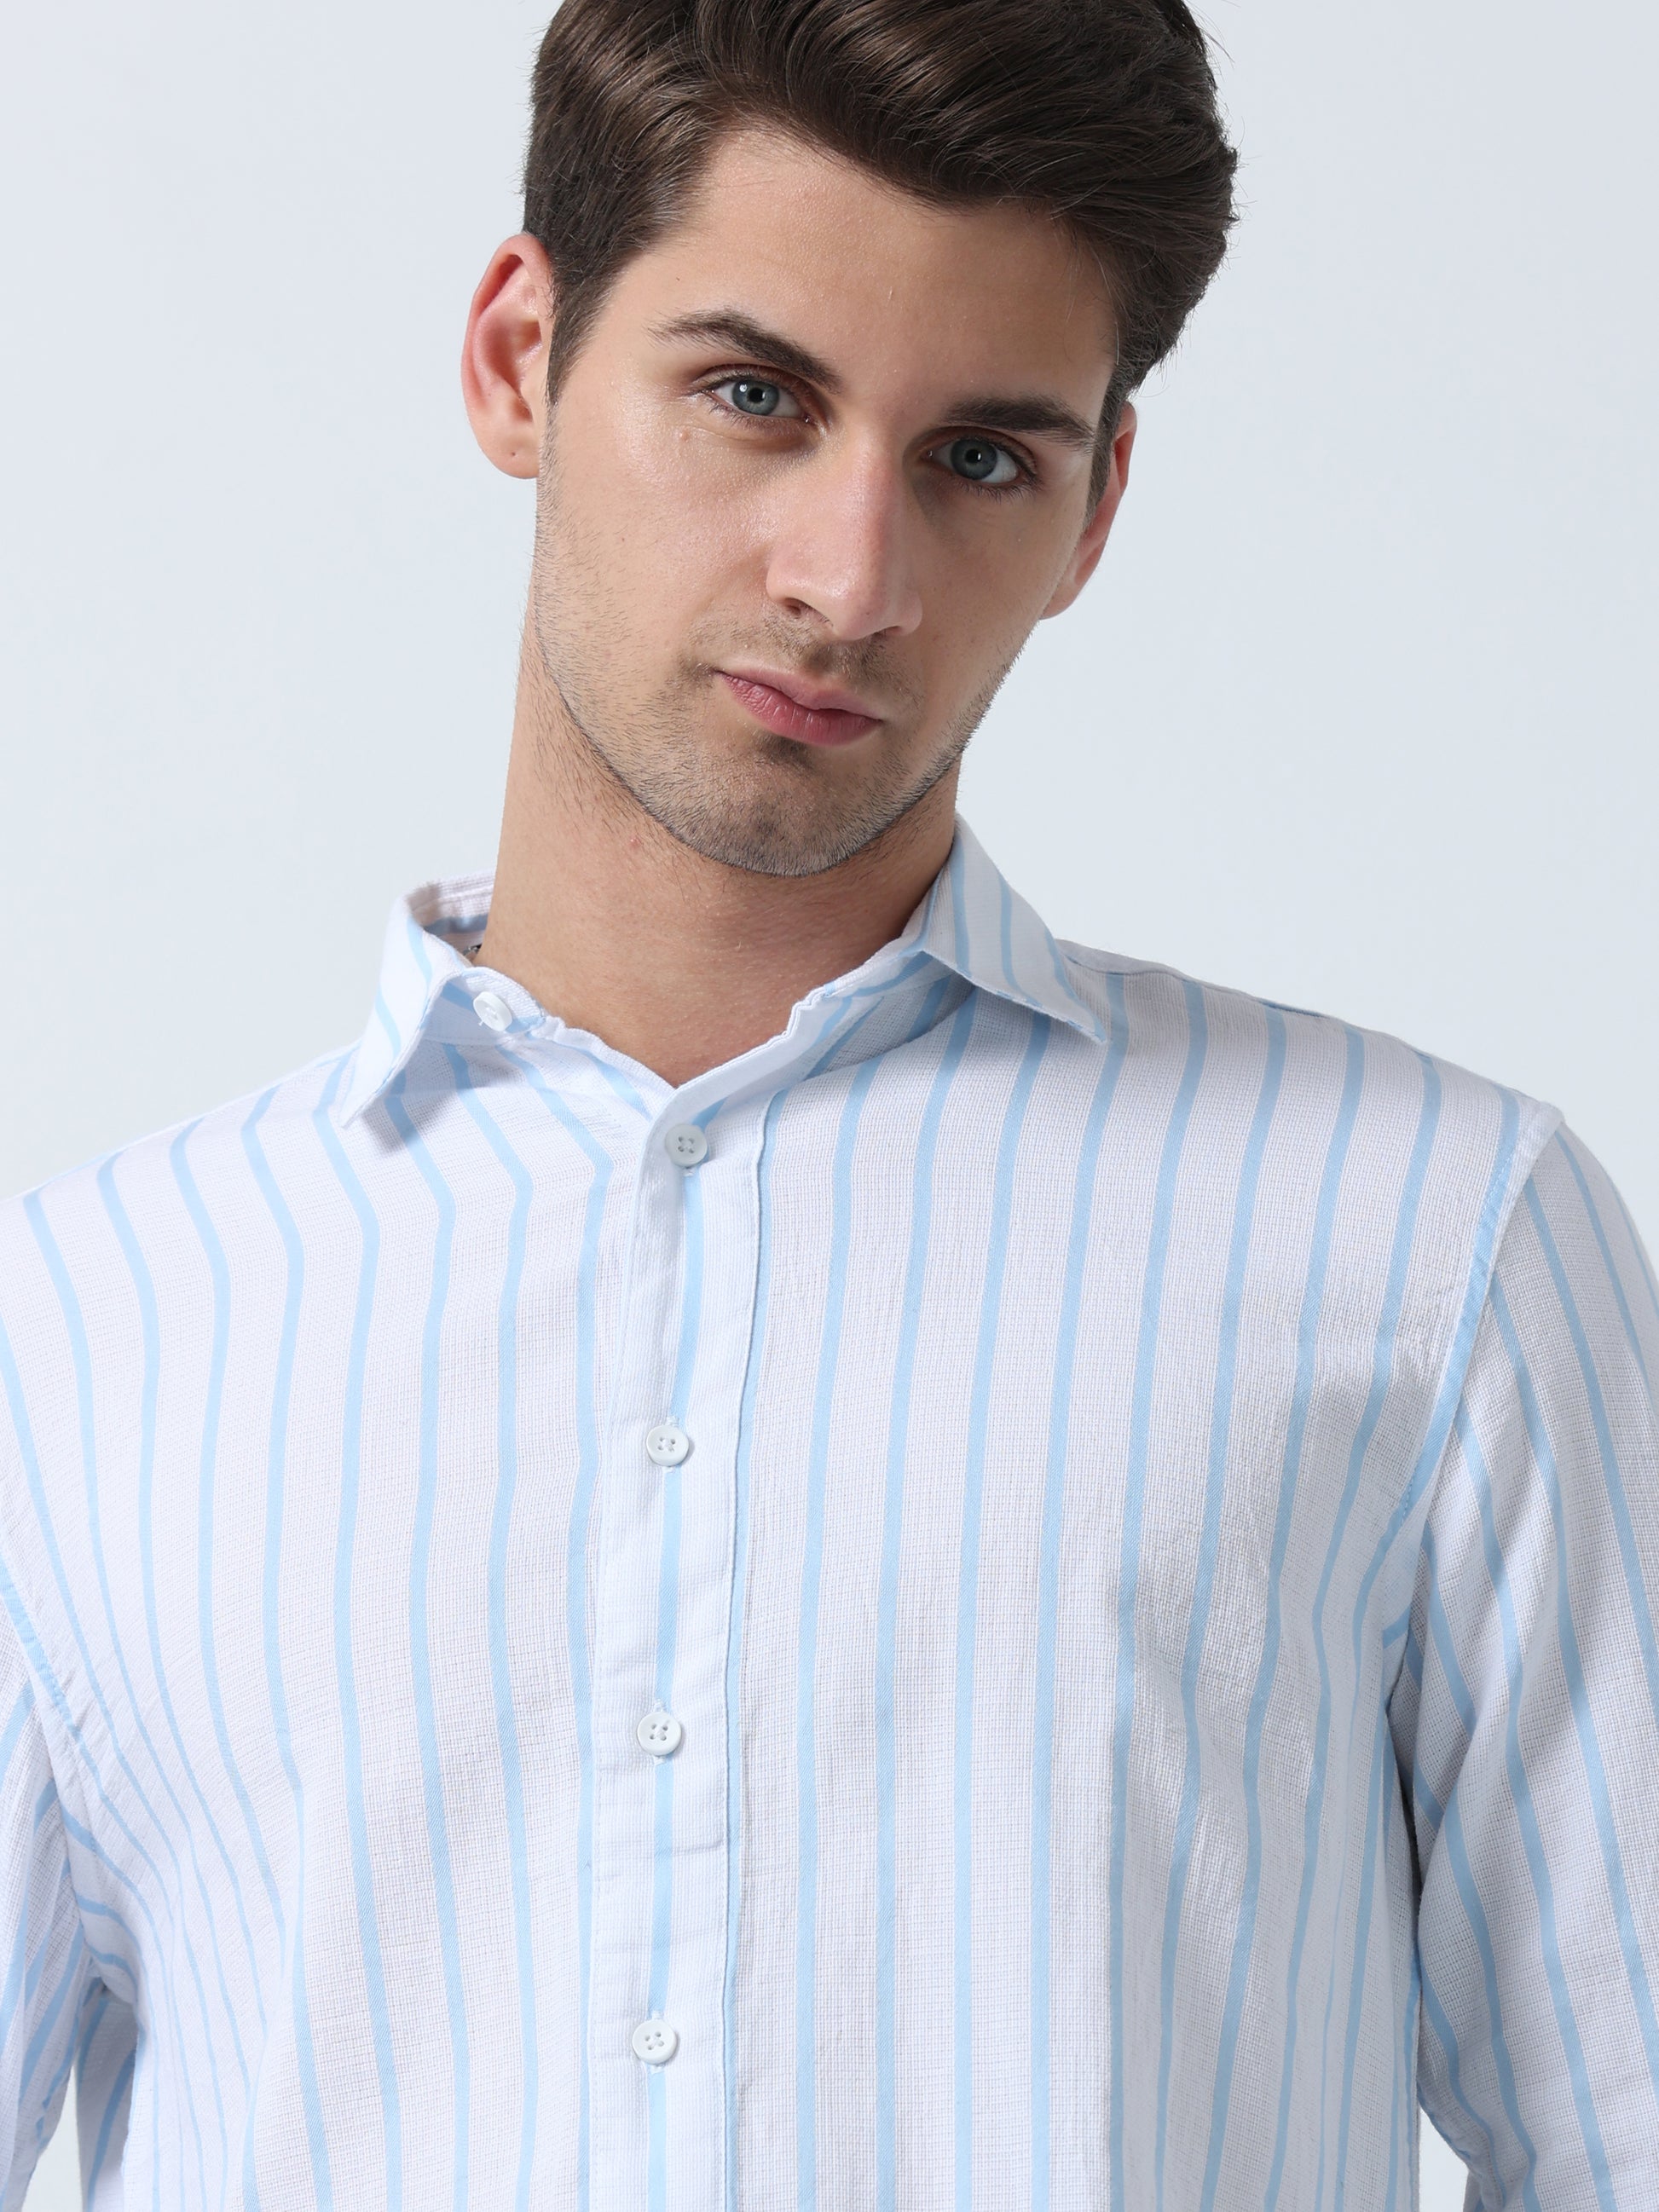 Blue Men's Full Sleeve Pin Striped Shirt